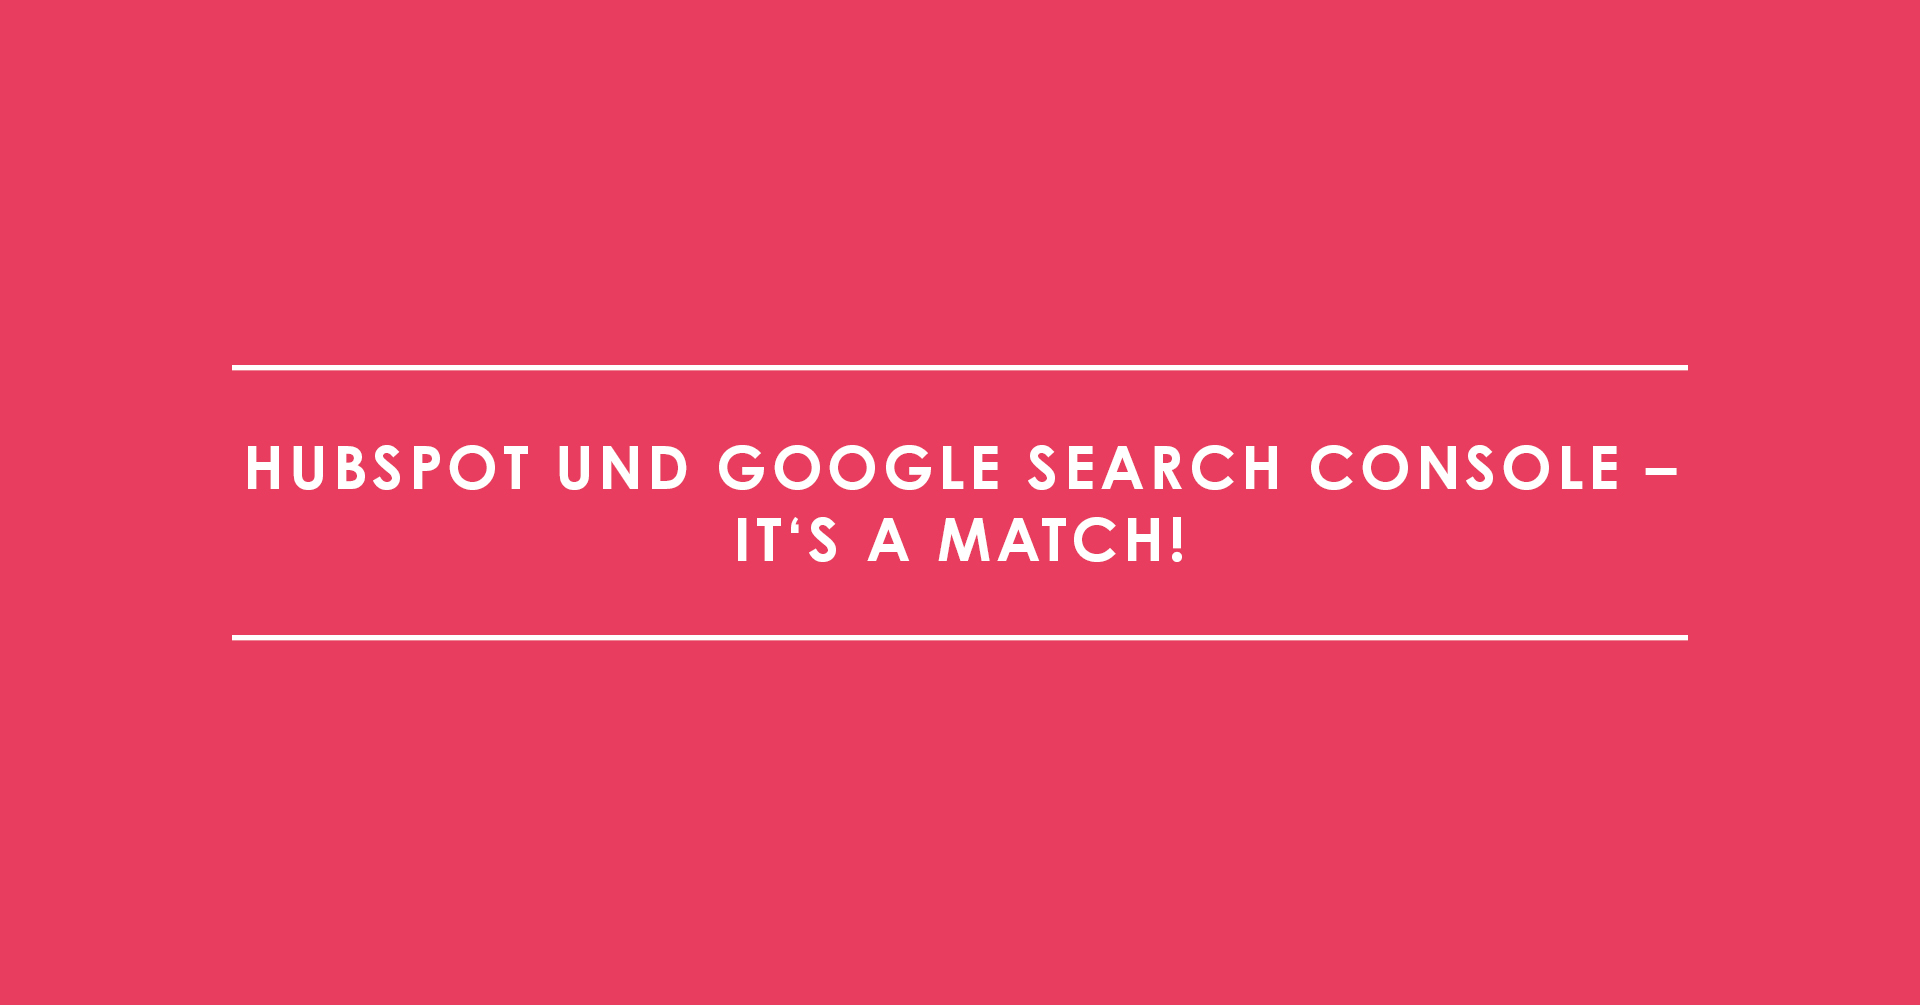 HubSpot und Google Search Console – It's a match!